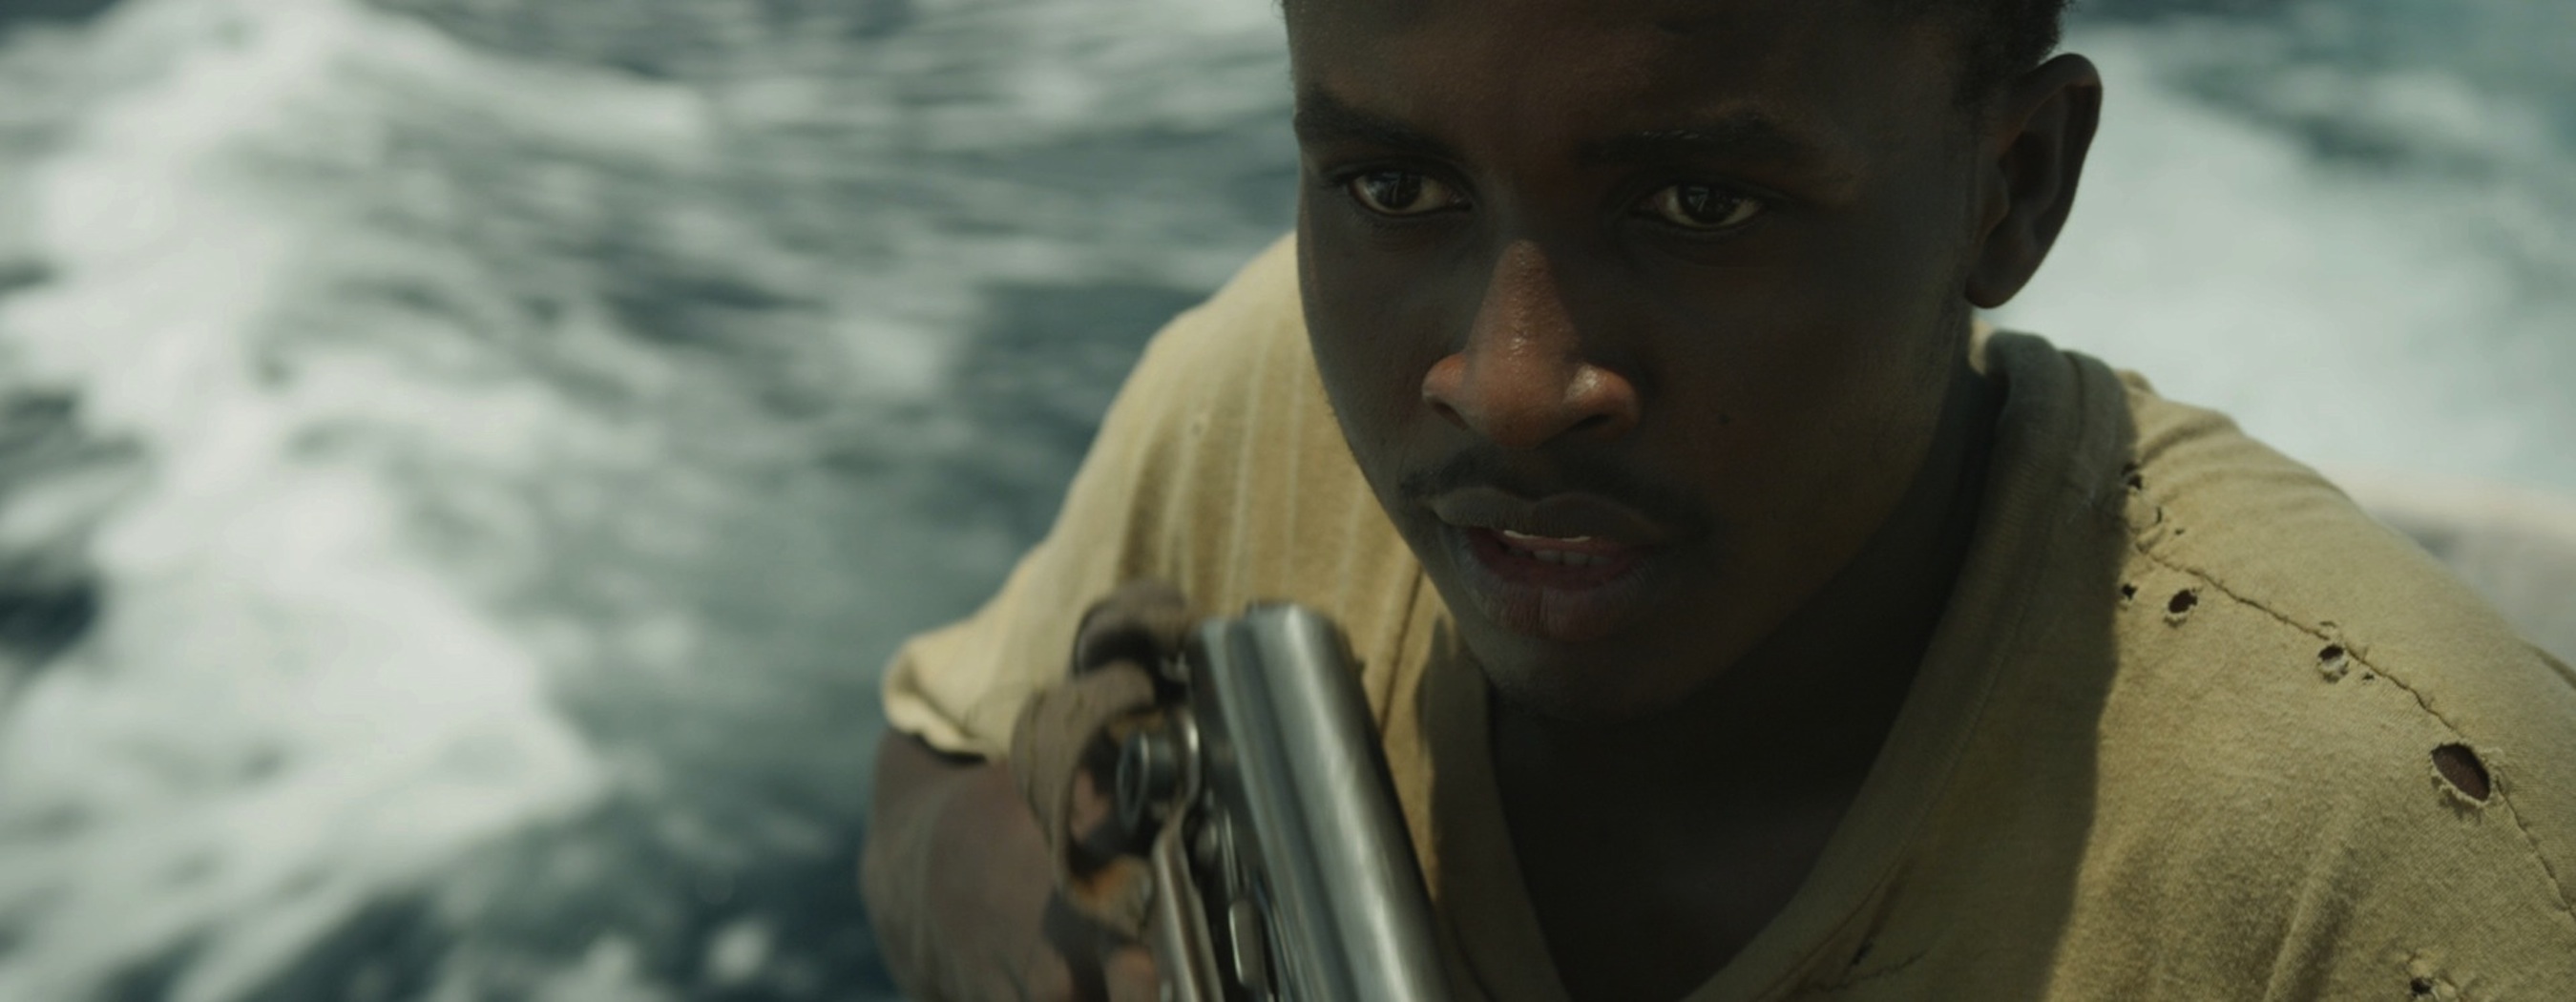 Abdi (Muktar) nervously handles his AK-47.